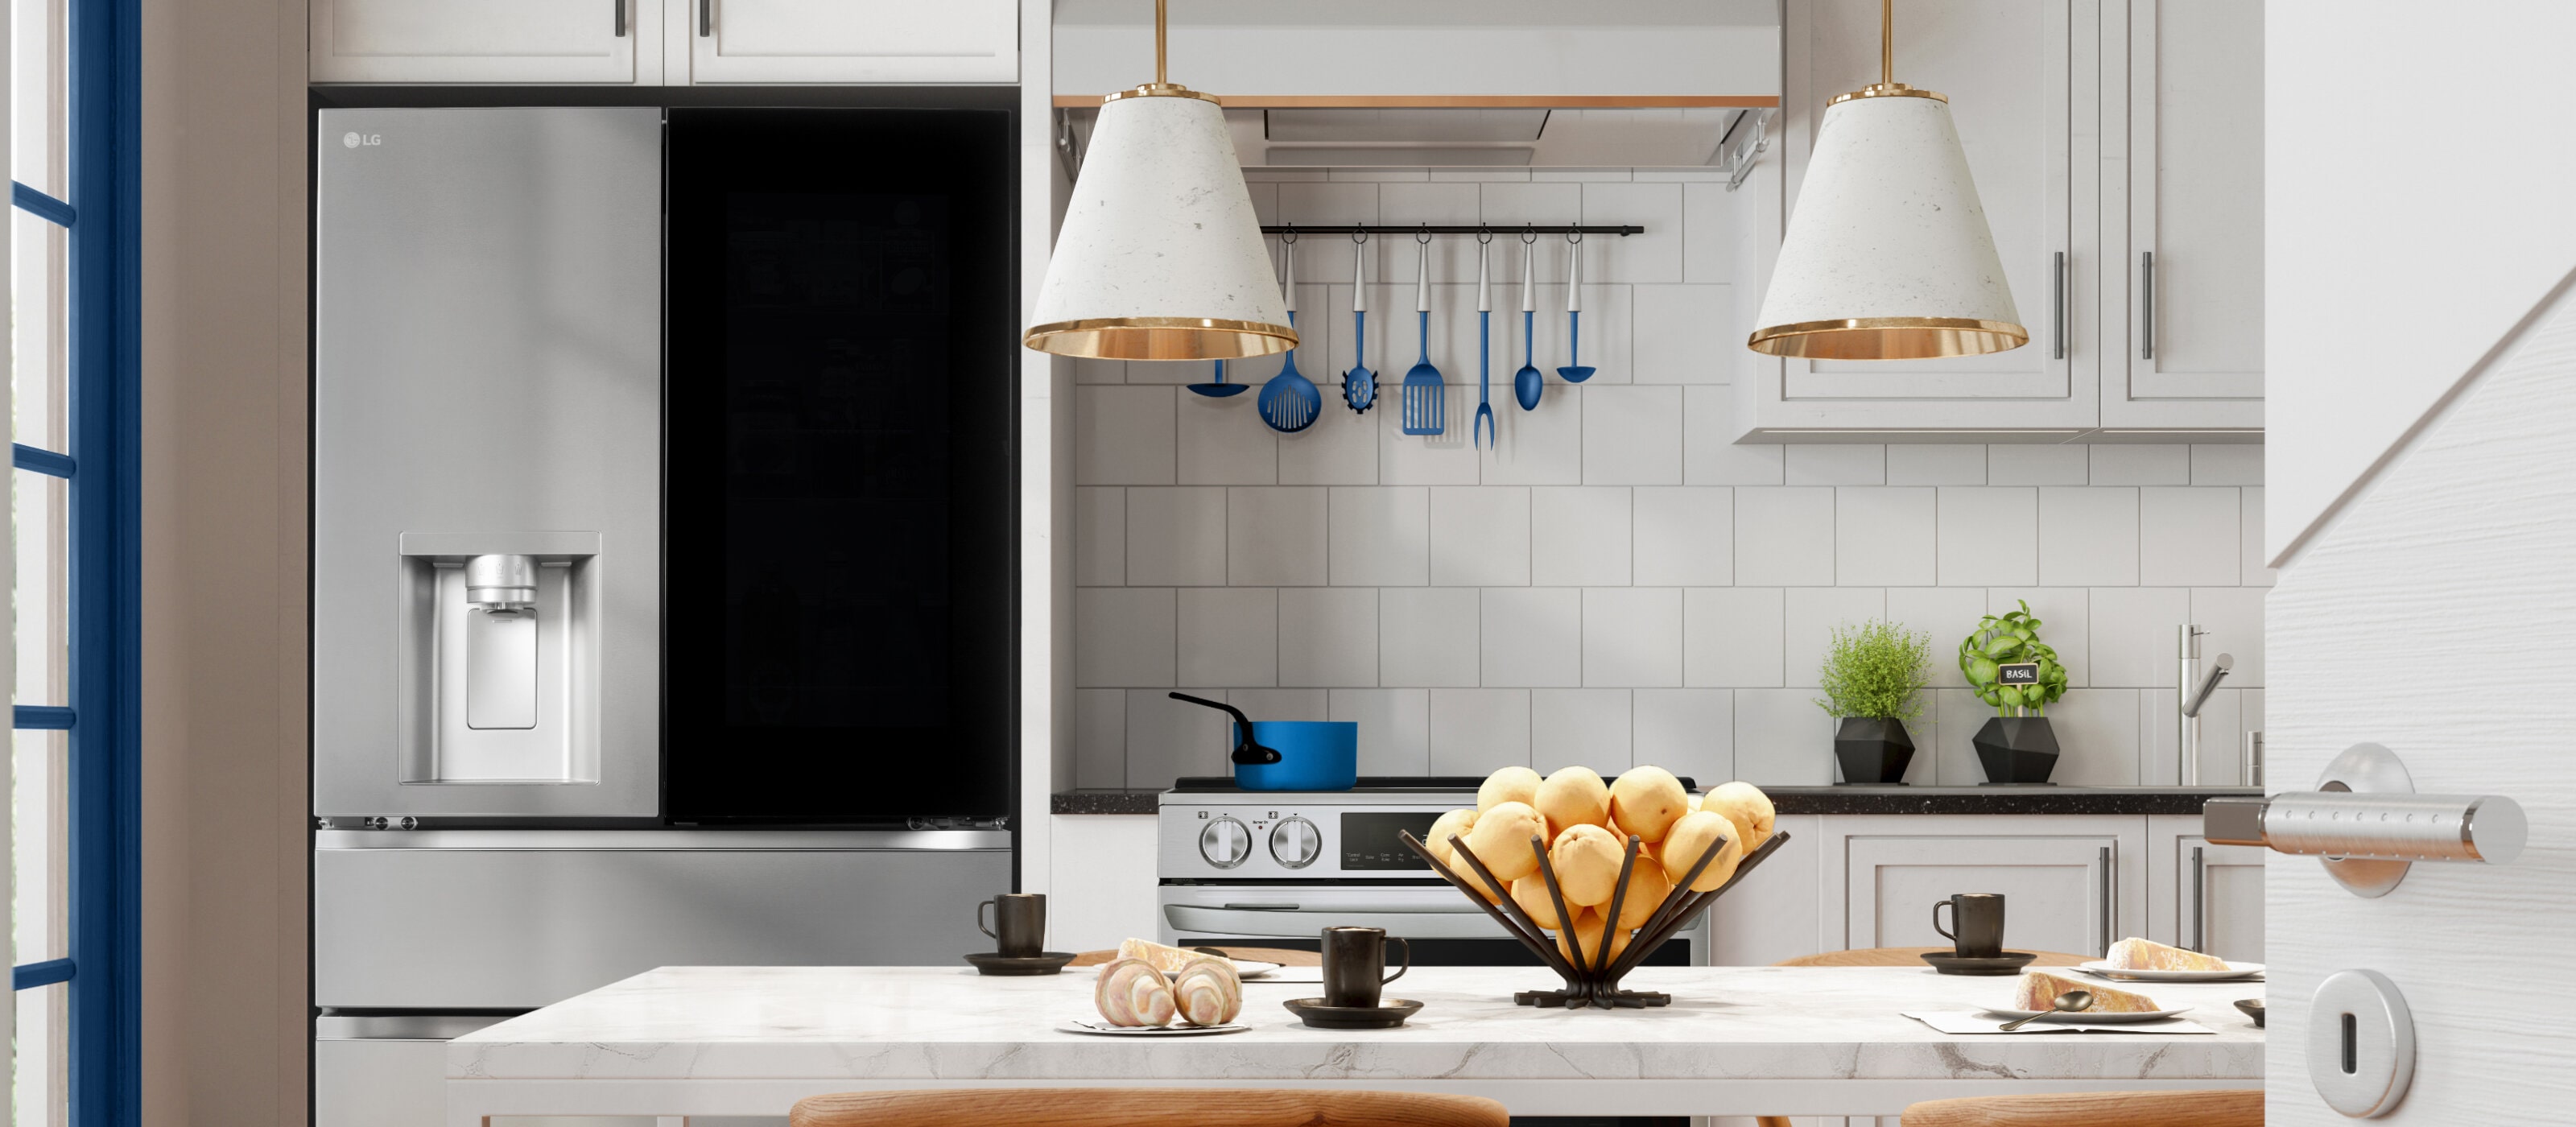 LG InstaView® MyColor™ Refrigerator view in elegant kitchen